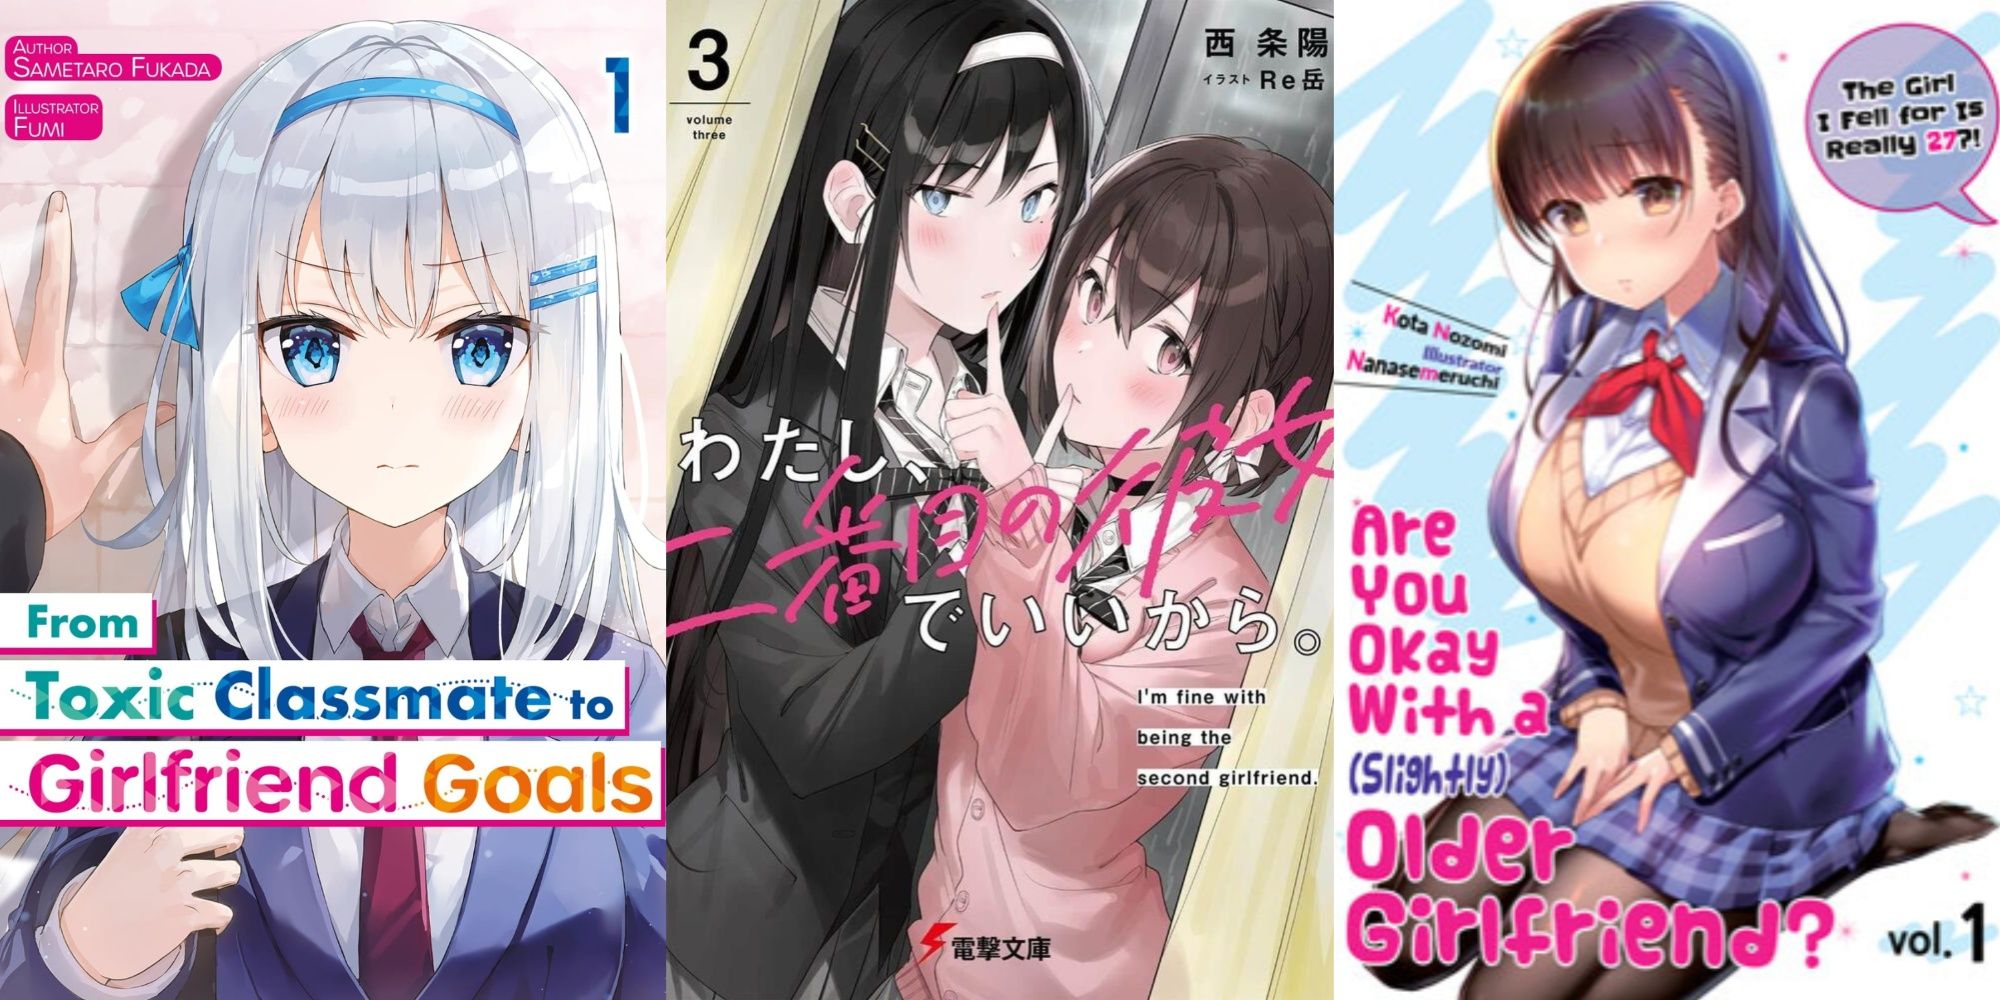 JAPAN novel: Love, Chunibyo & Other Delusions vol.3